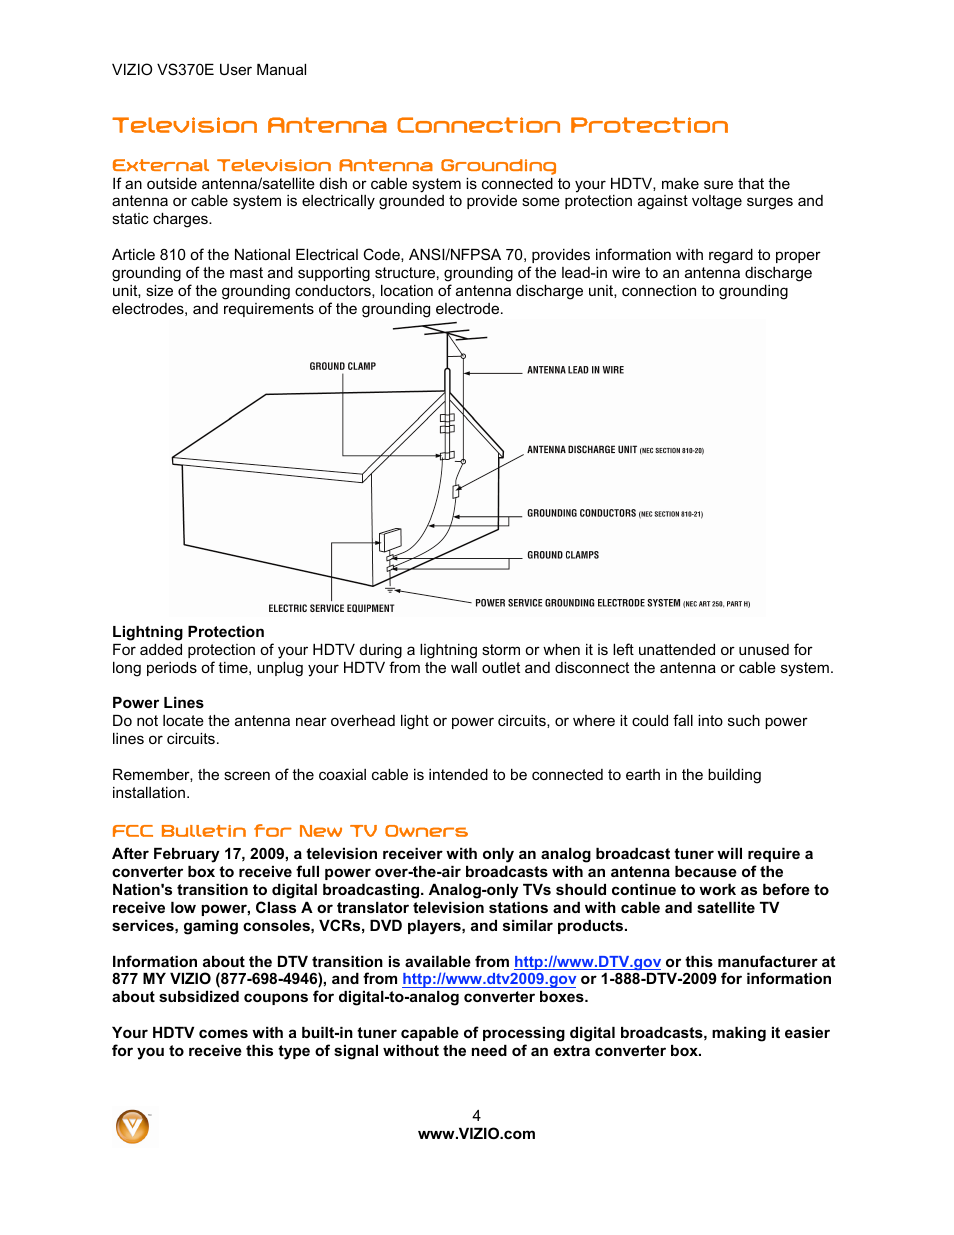 Television antenna connection protection | Vizio VS370E User Manual | Page 4 / 43